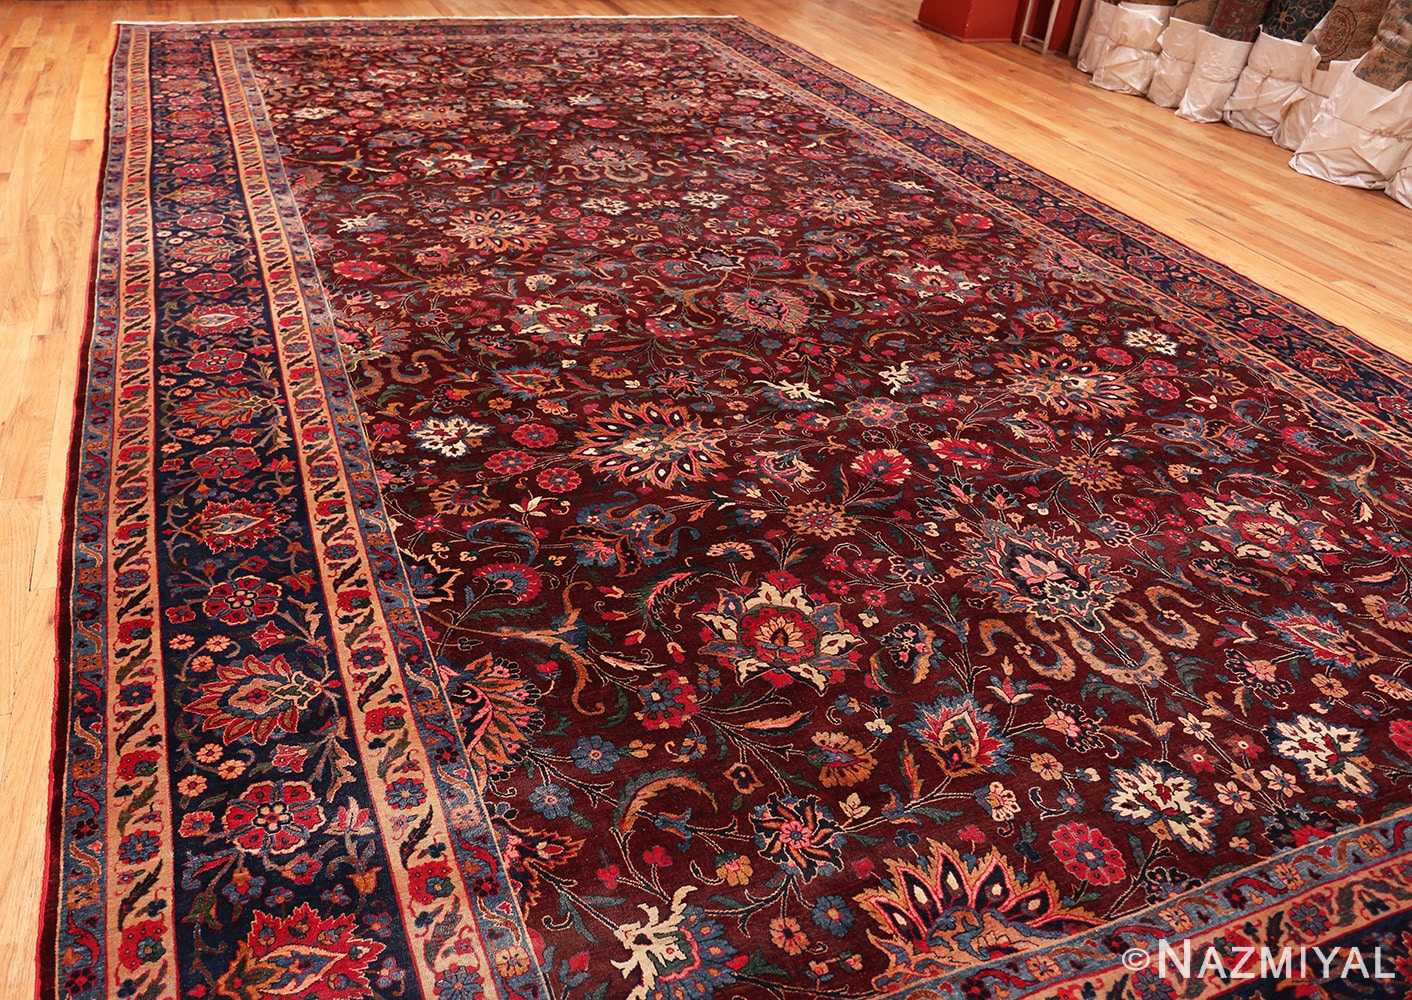 Full Aubergine Antique Persian Kerman rug 44830 by Nazmiyal